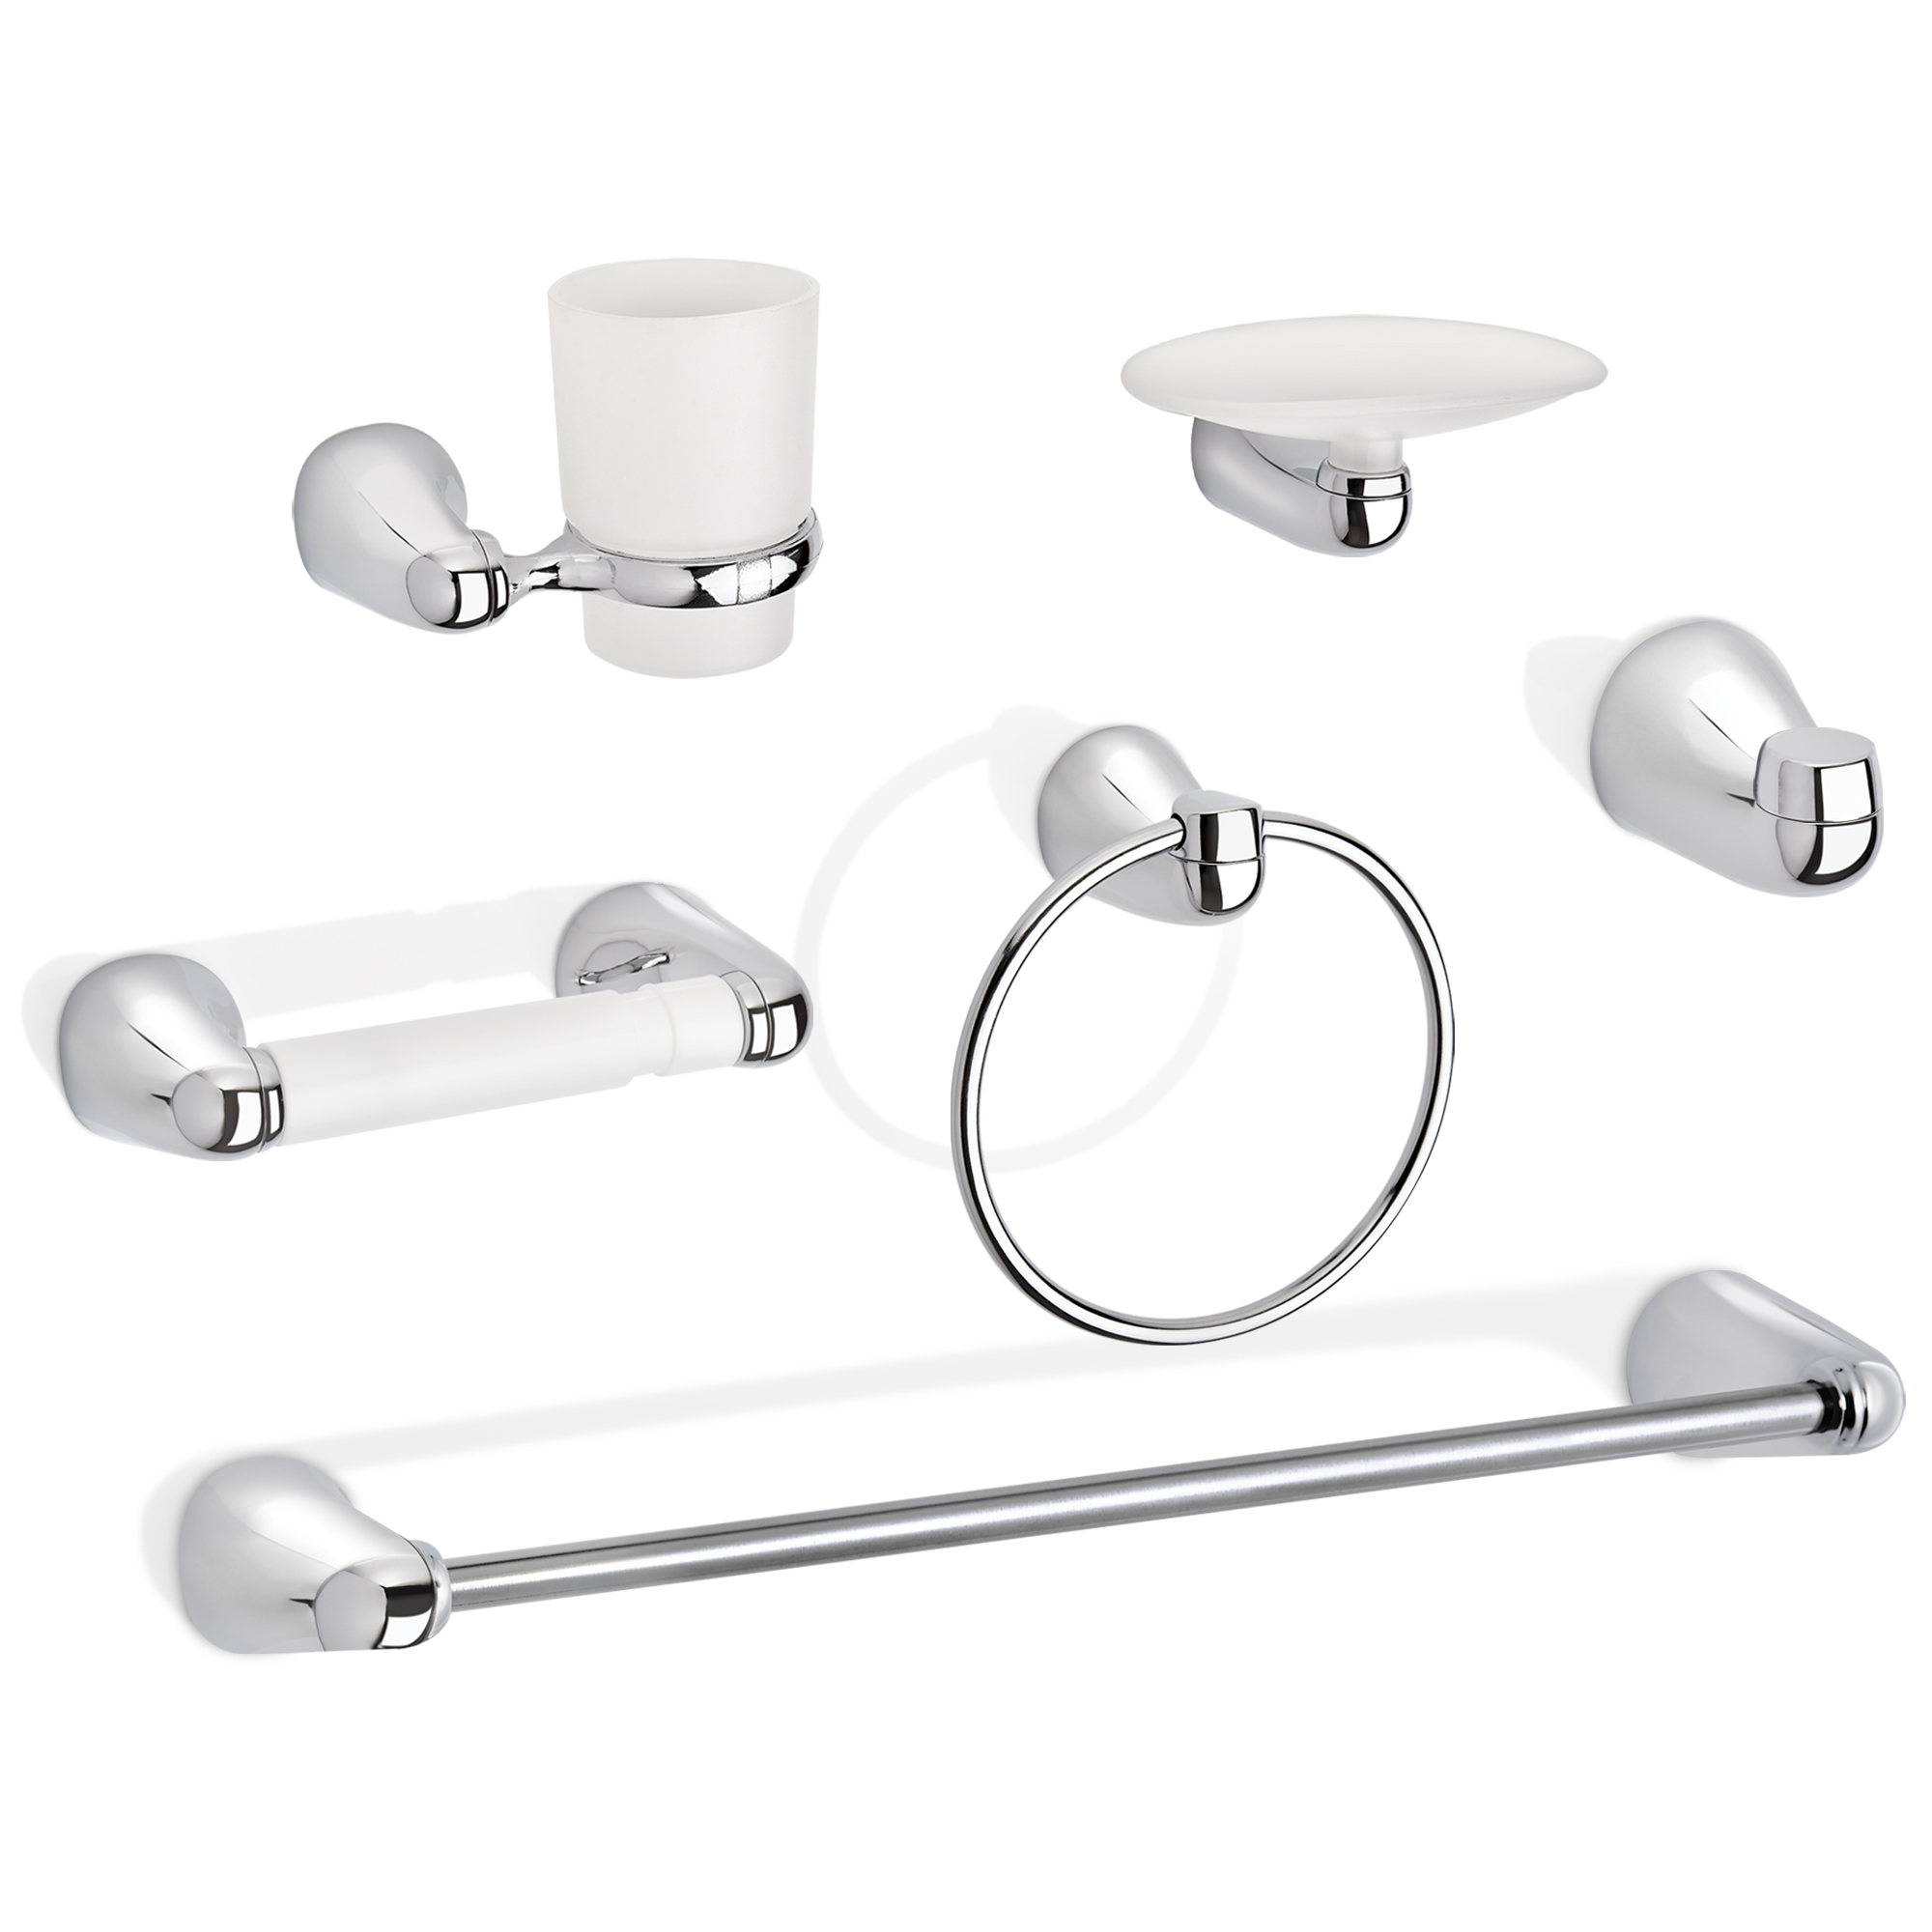 Set accesorios baño Link blanco